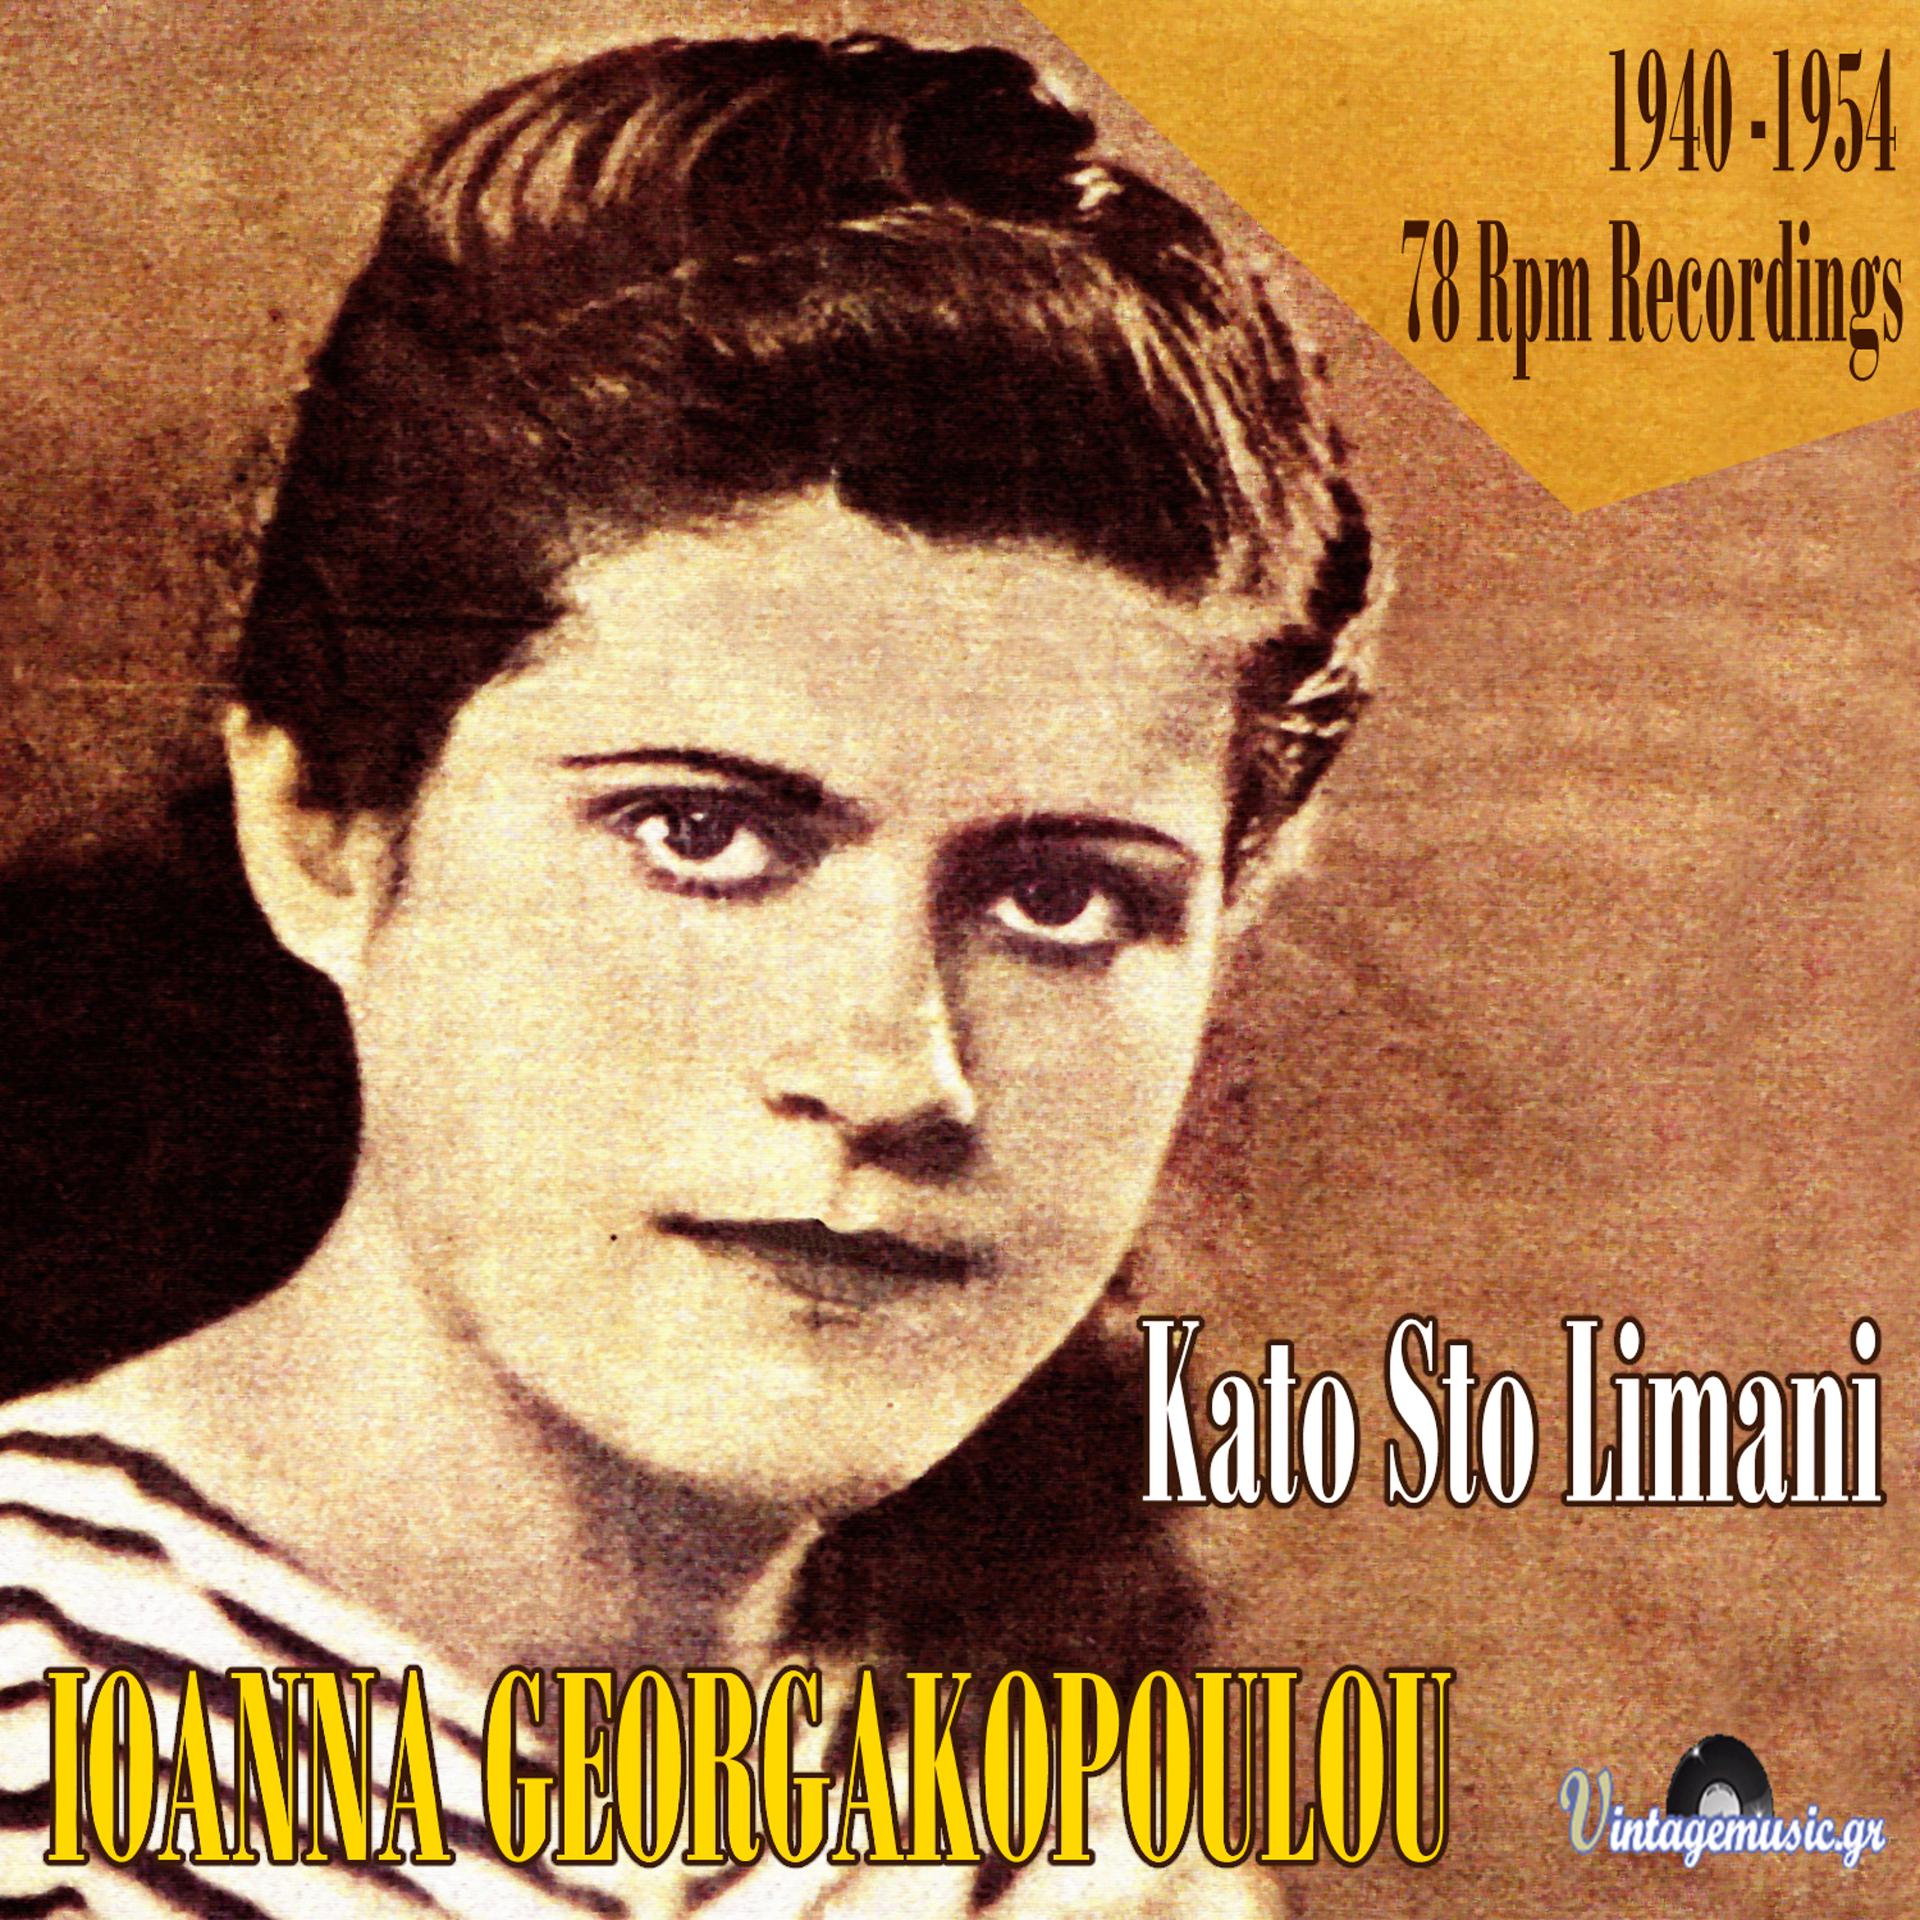 Постер альбома Kato Sto Pasalimani (1940-1954 78 Rpm Recordings)